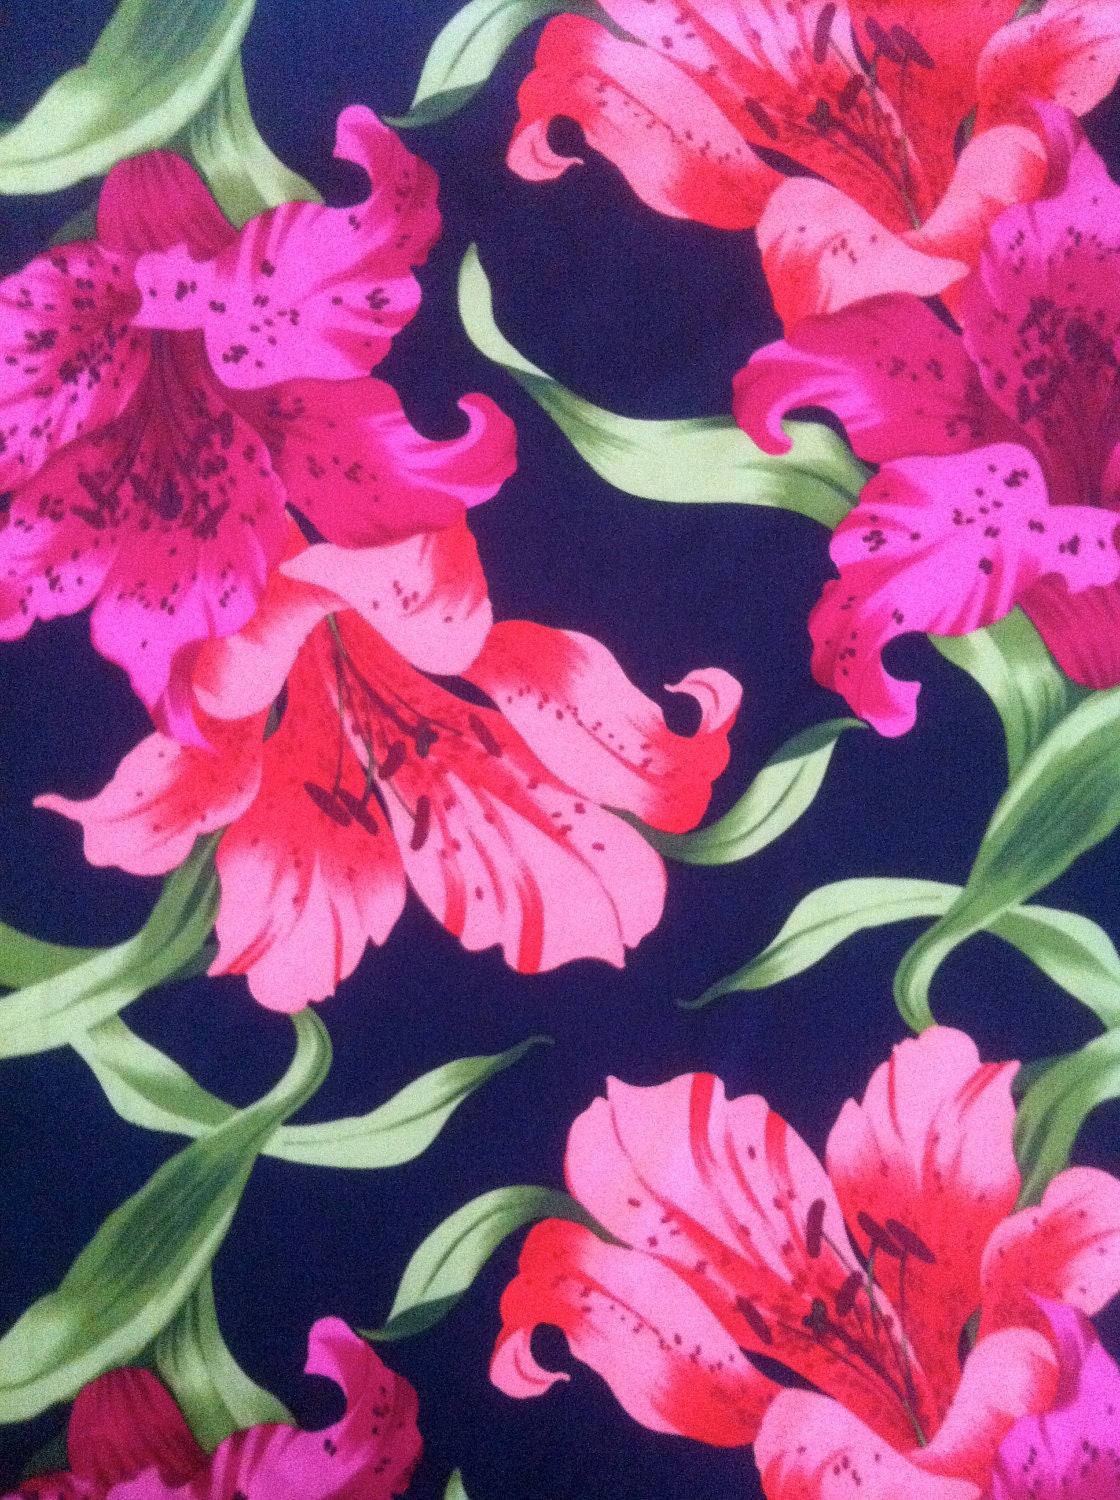 100% Silk Large Lily Print Fabric 2 yards by SophiaFashions